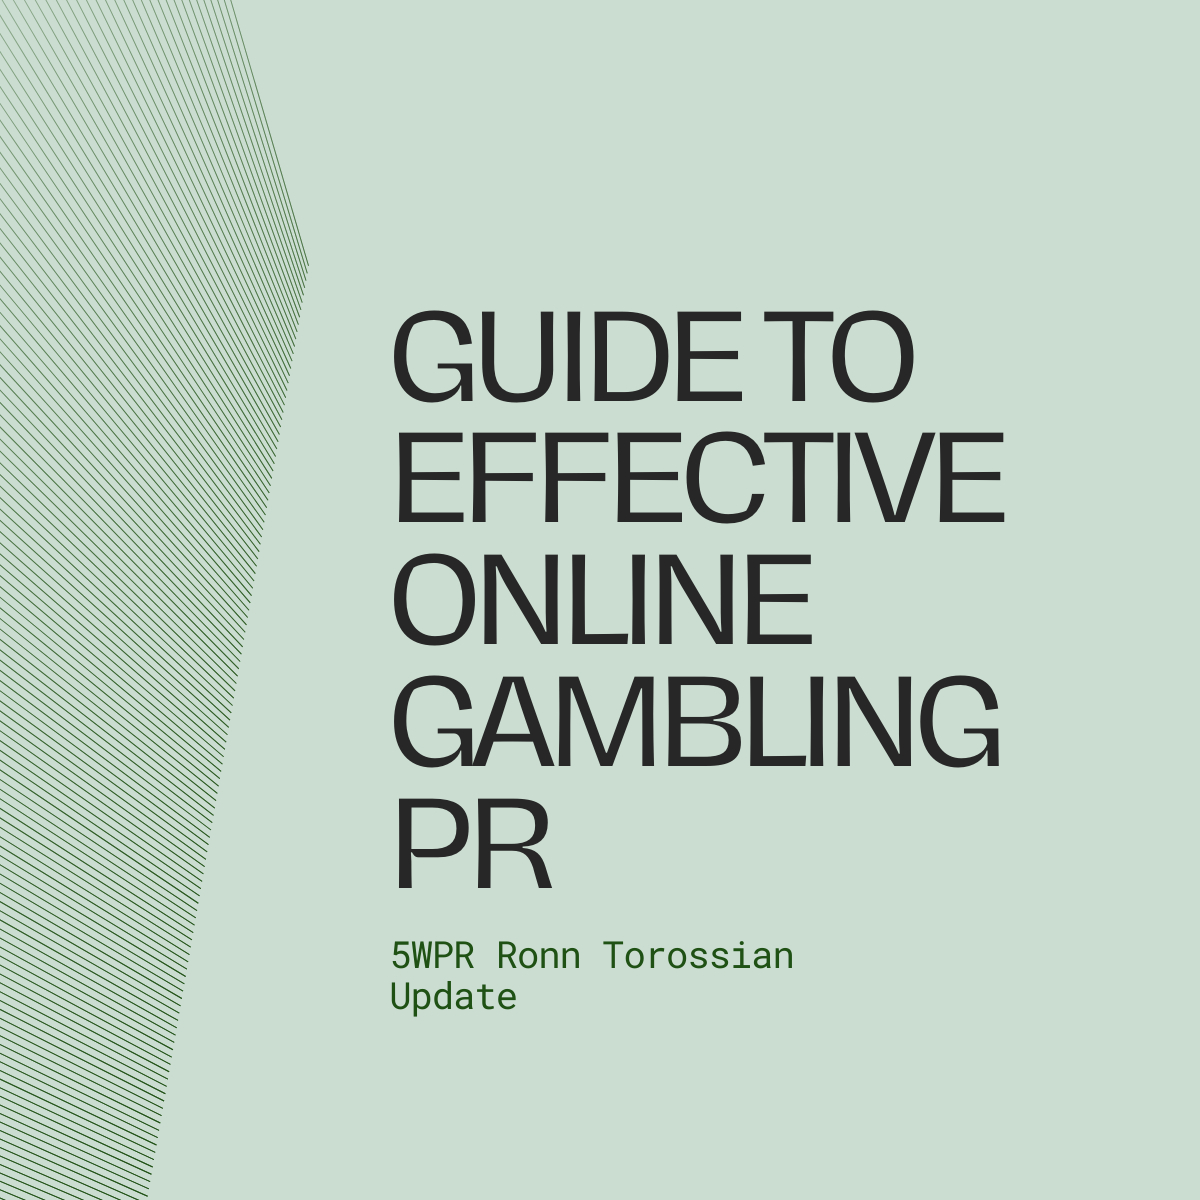 Guide to Effective Online Gambling PR